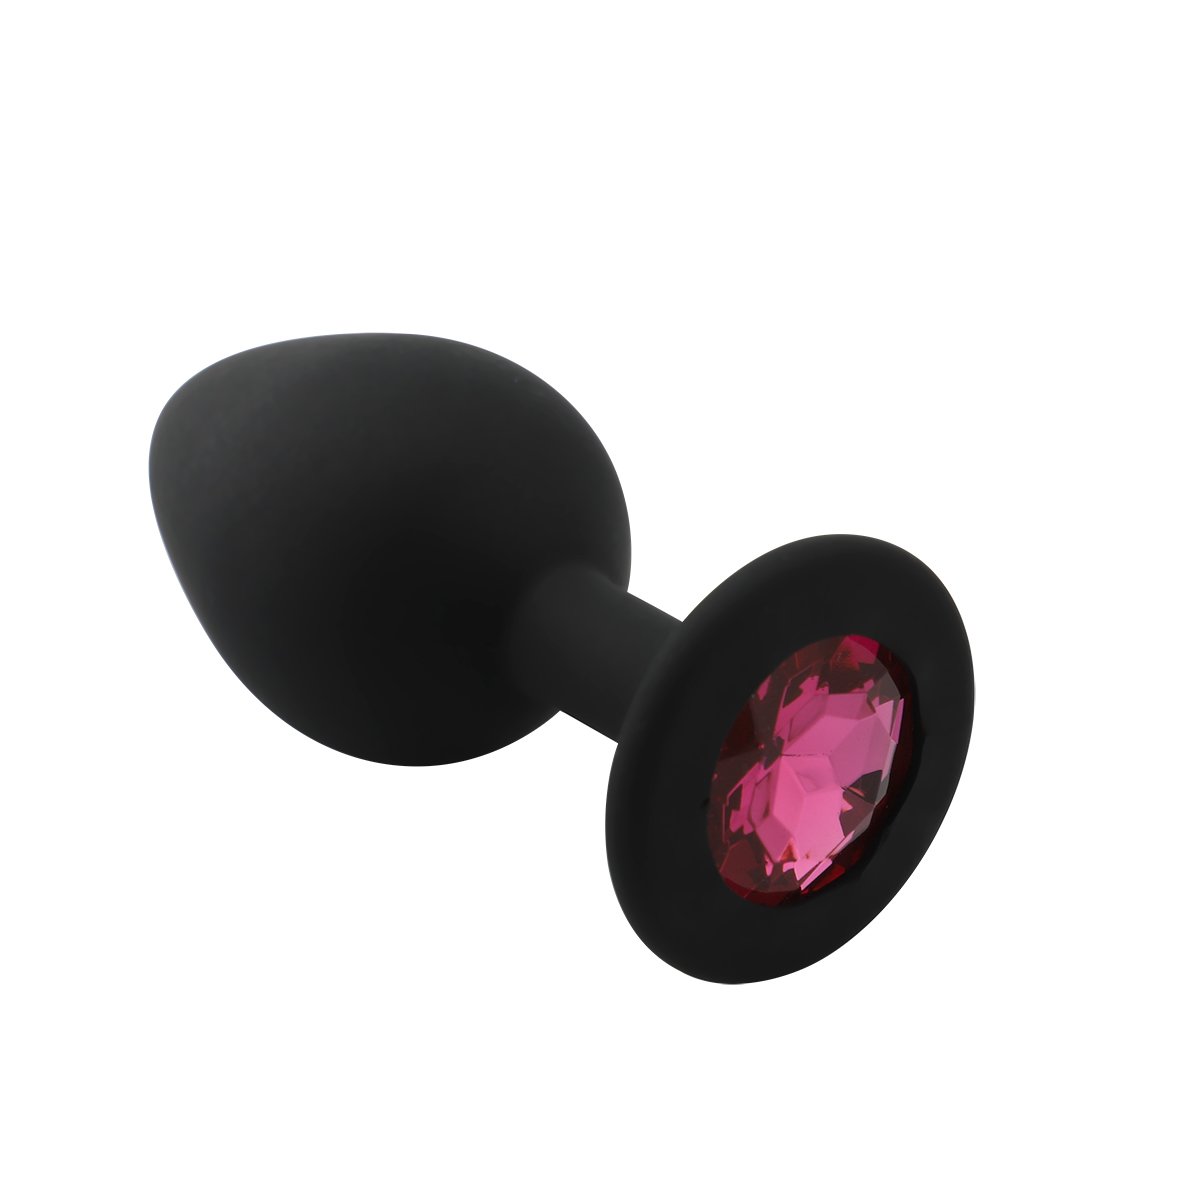 Foto van Banoch - Buttplug Penumbra Hot Pink Small - Siliconen buttplug Zwart - kristal - Roze